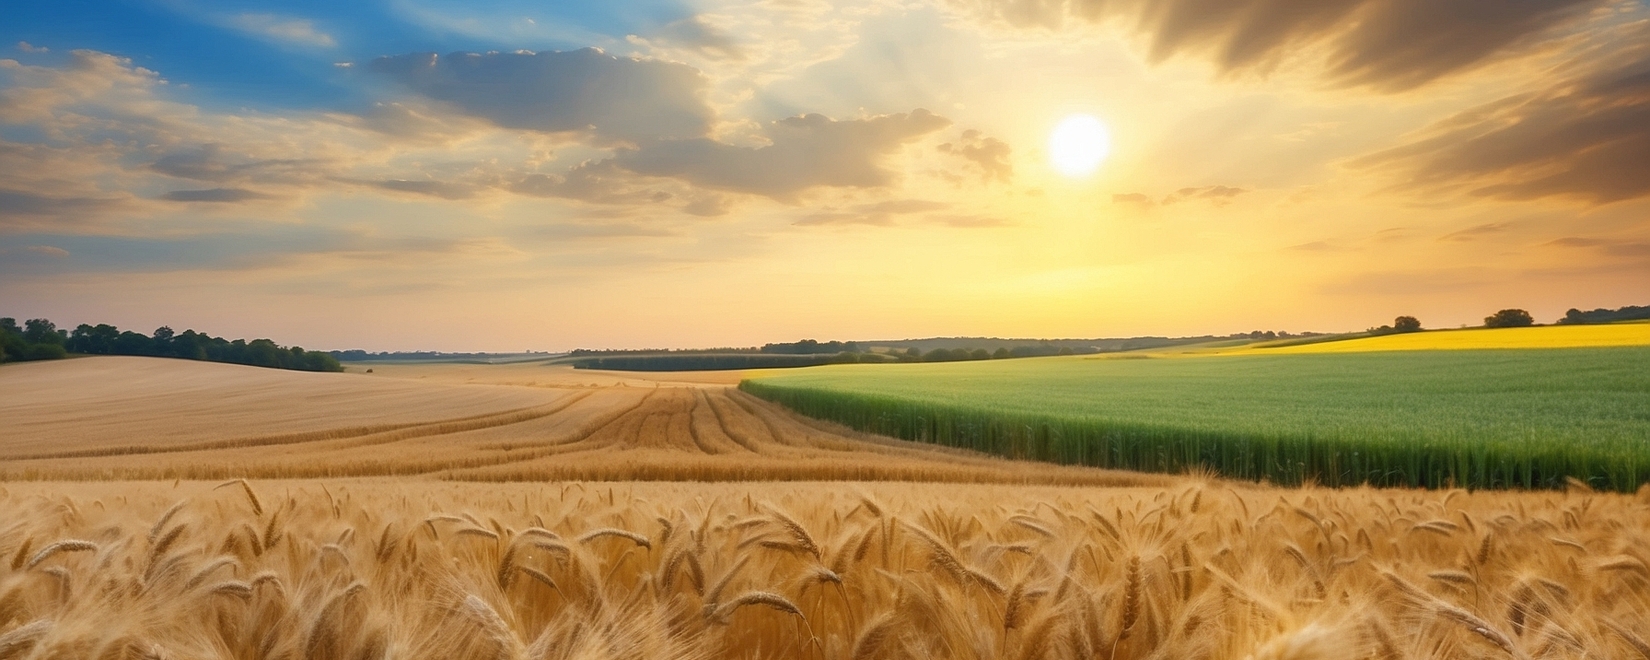 Последние новости о пошлинах на пшеницу и кукурузу